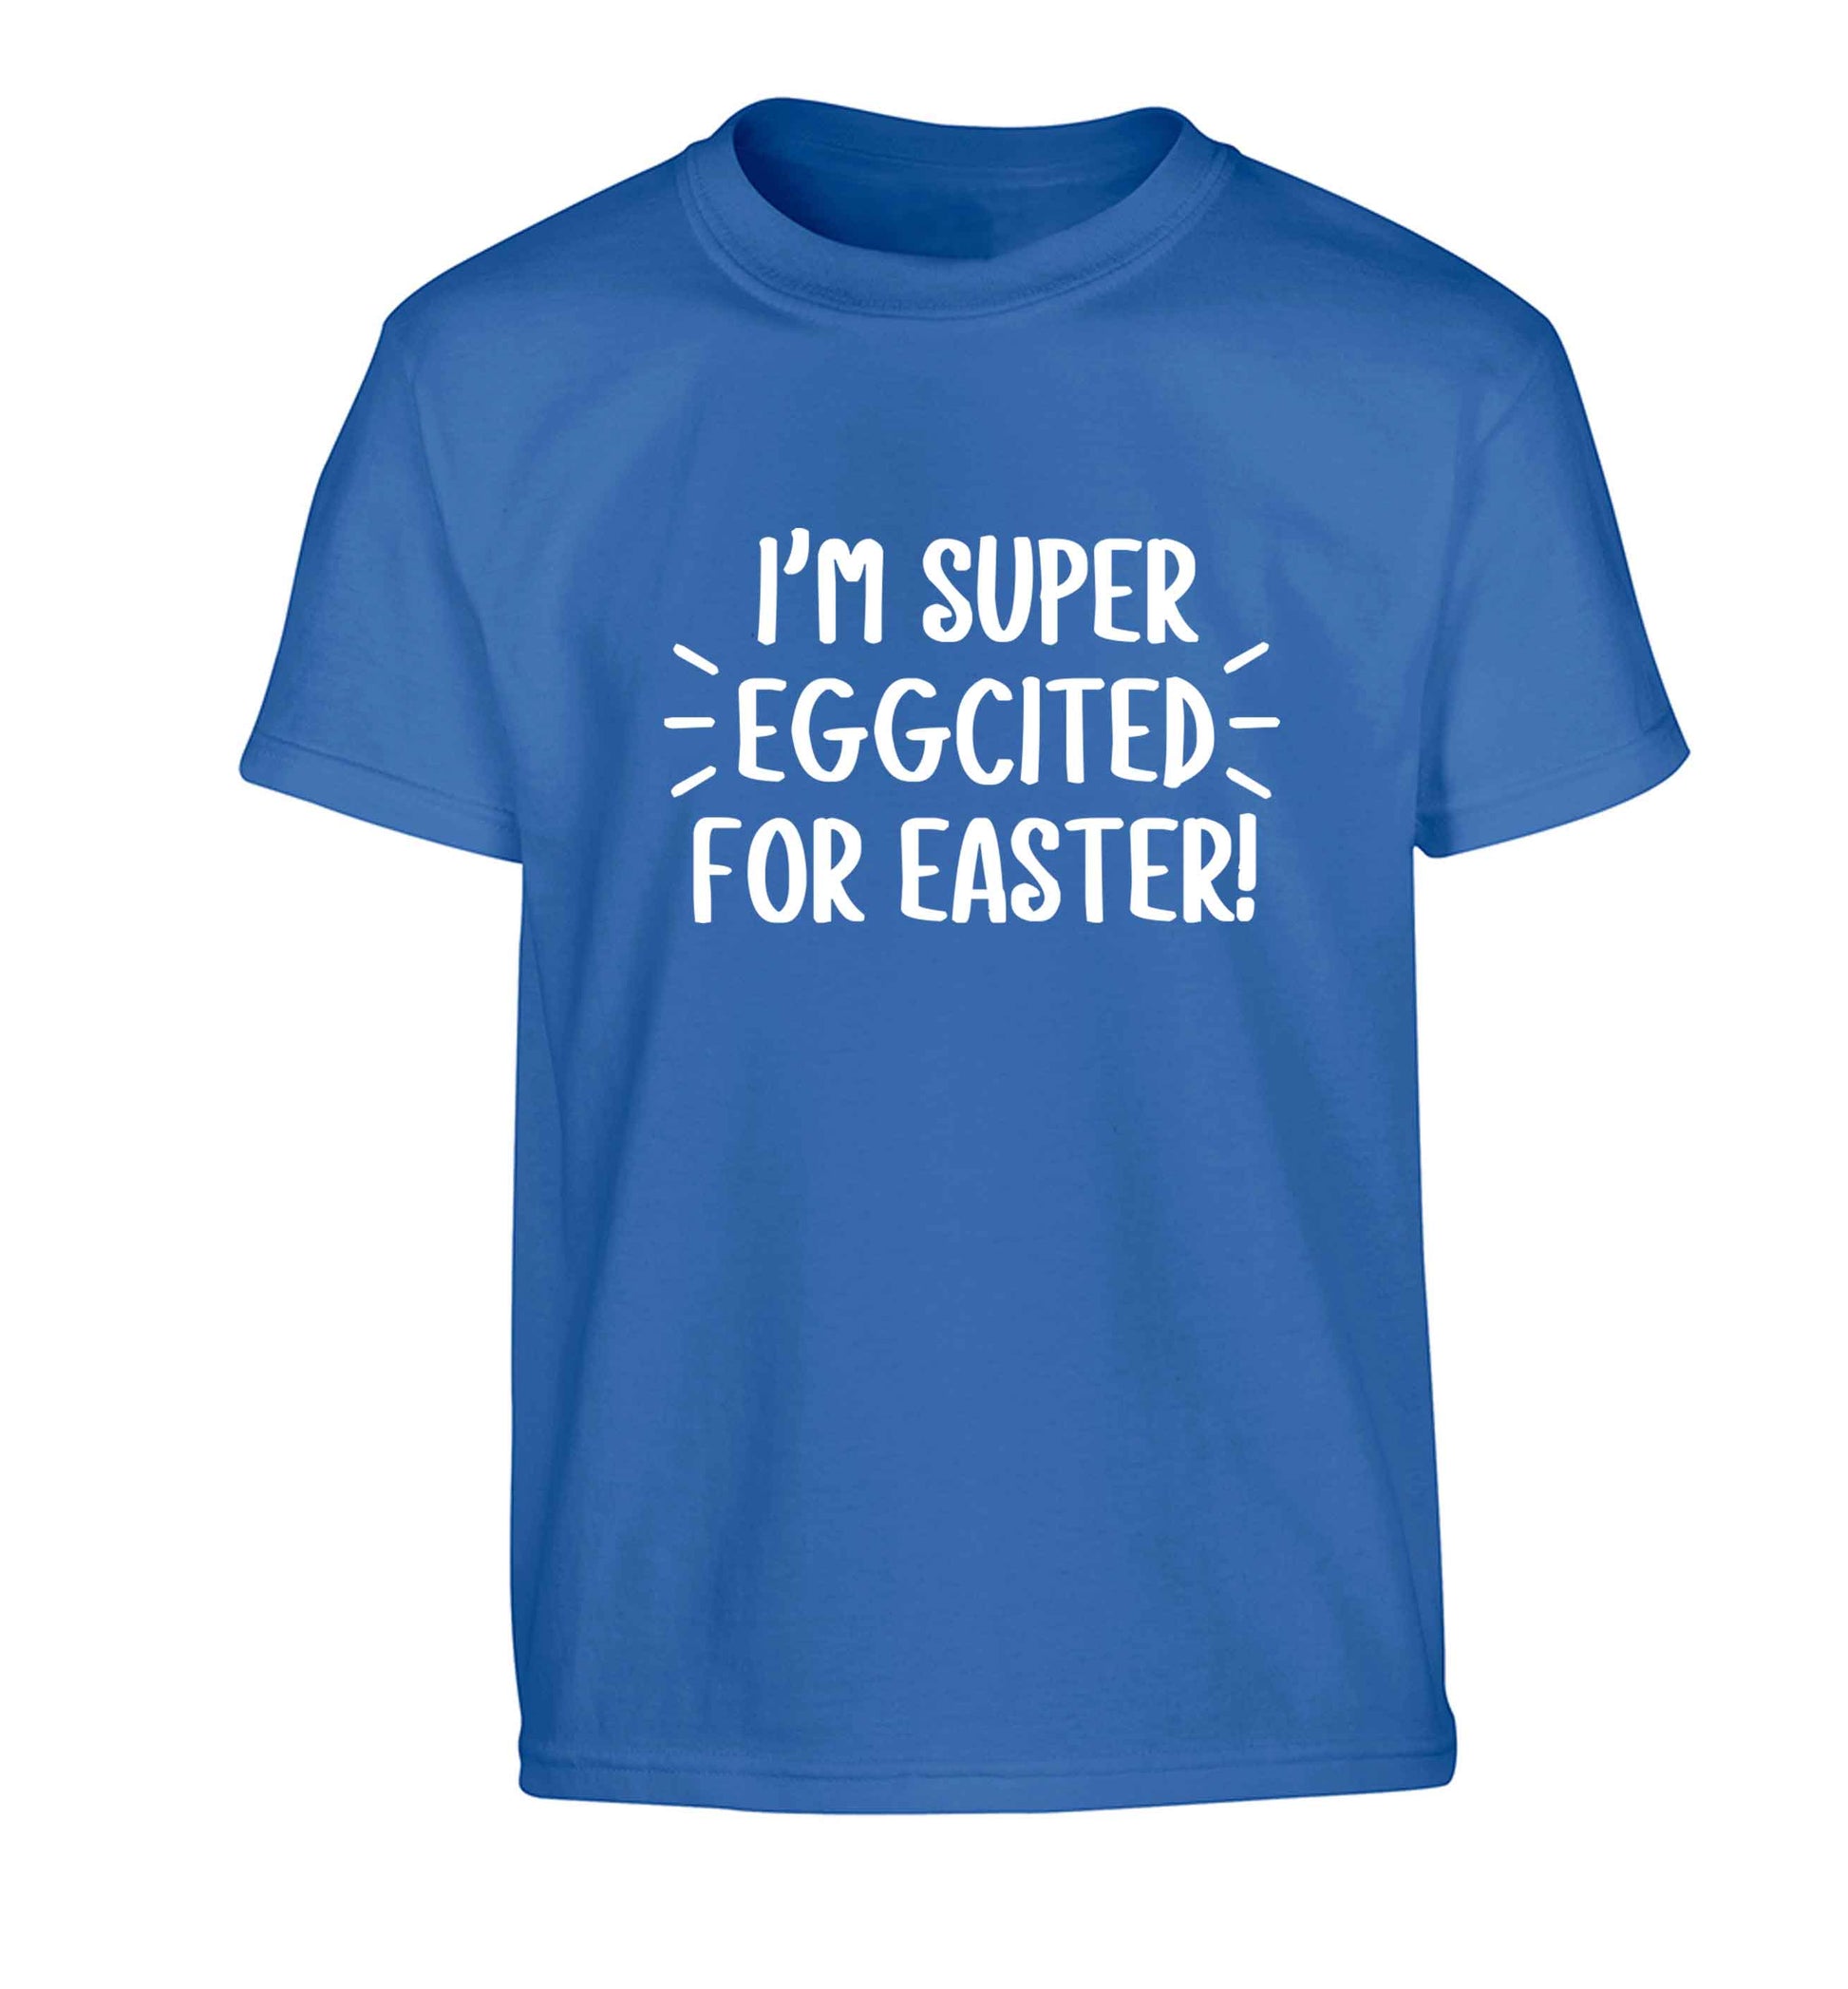 I'm super eggcited for Easter Children's blue Tshirt 12-13 Years